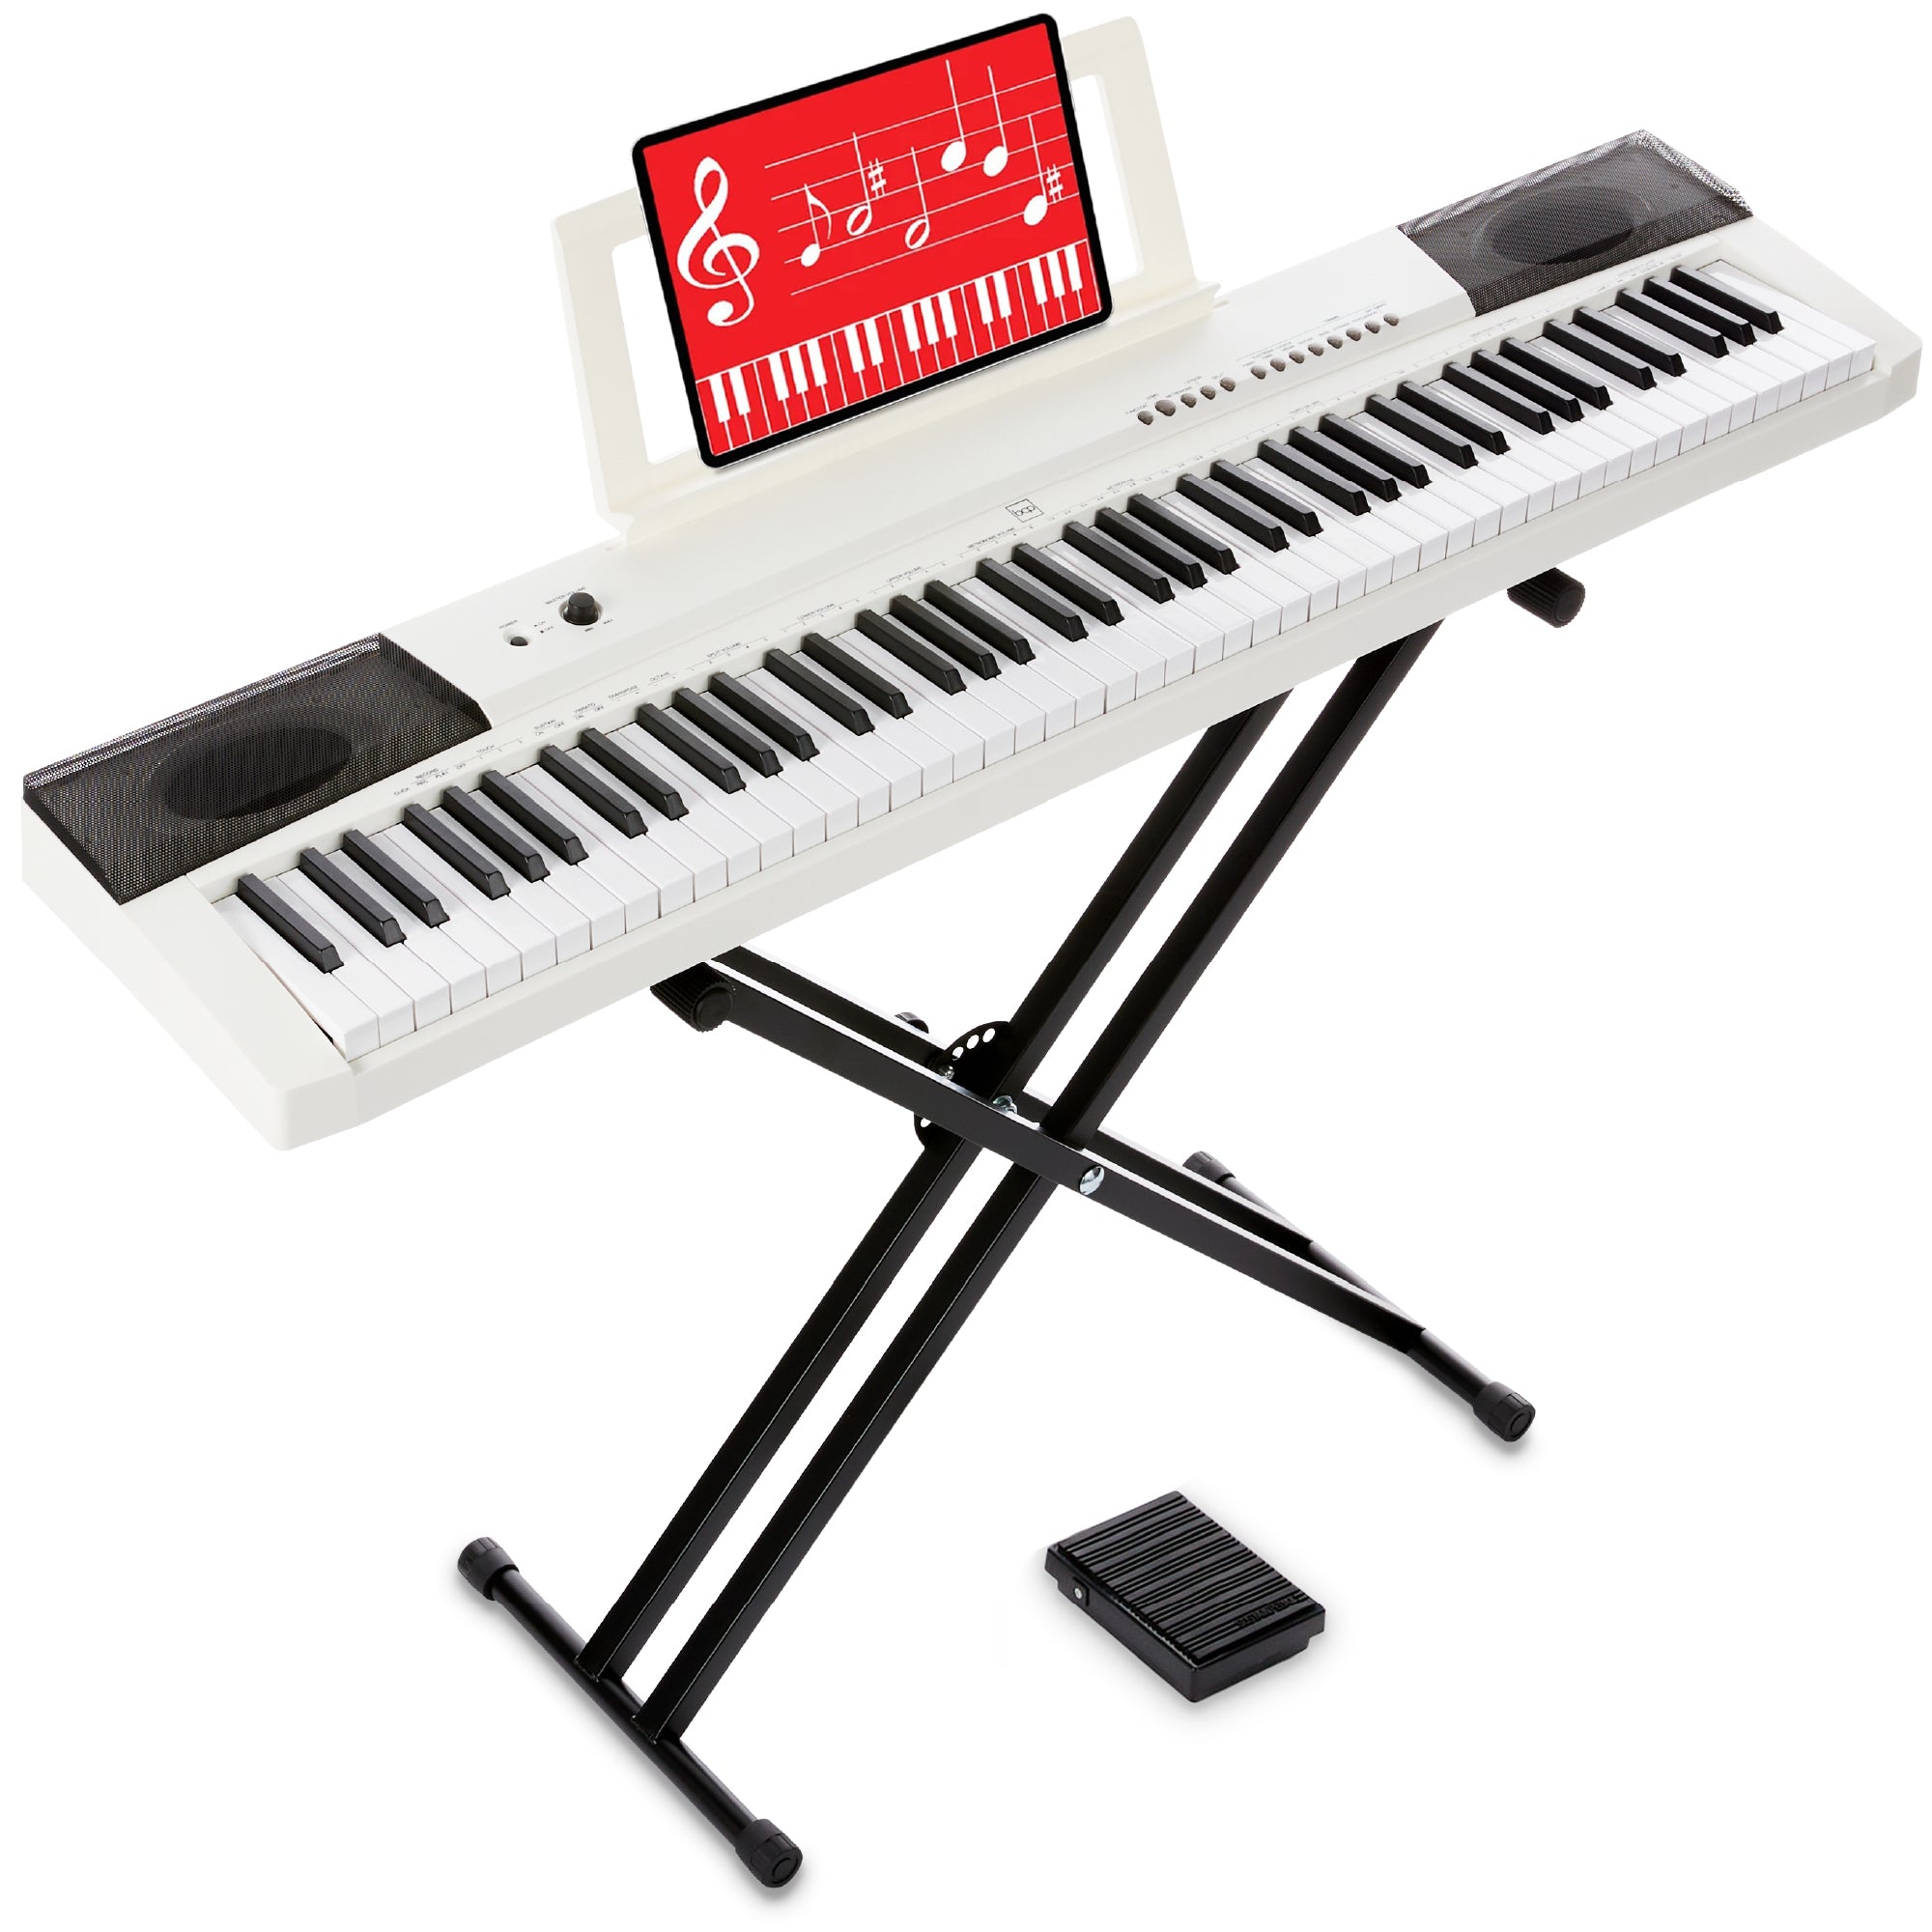 Sonart 88 Key Portable Full Size Digital Piano MIDI Keyboard w/ Pedal